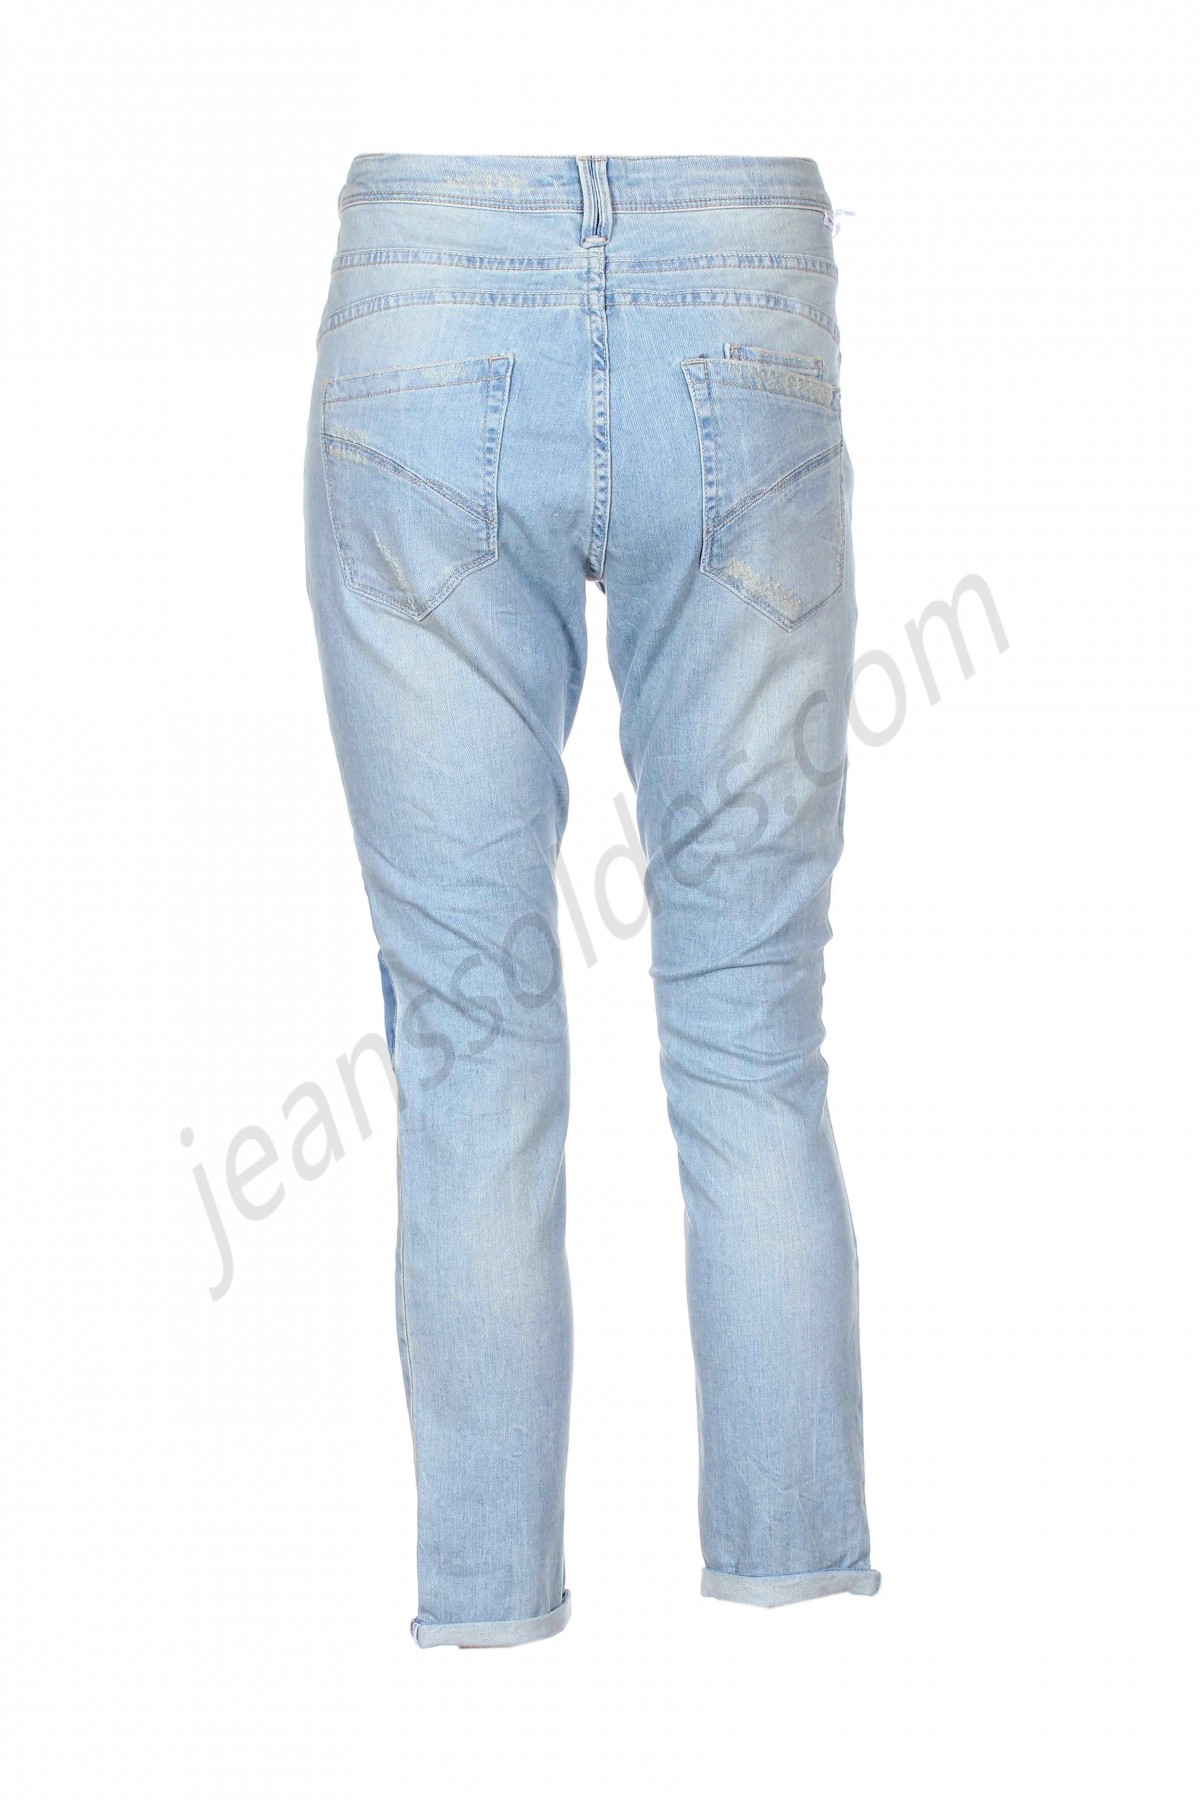 teddy smith-Jeans coupe slim prix d’amis - -1